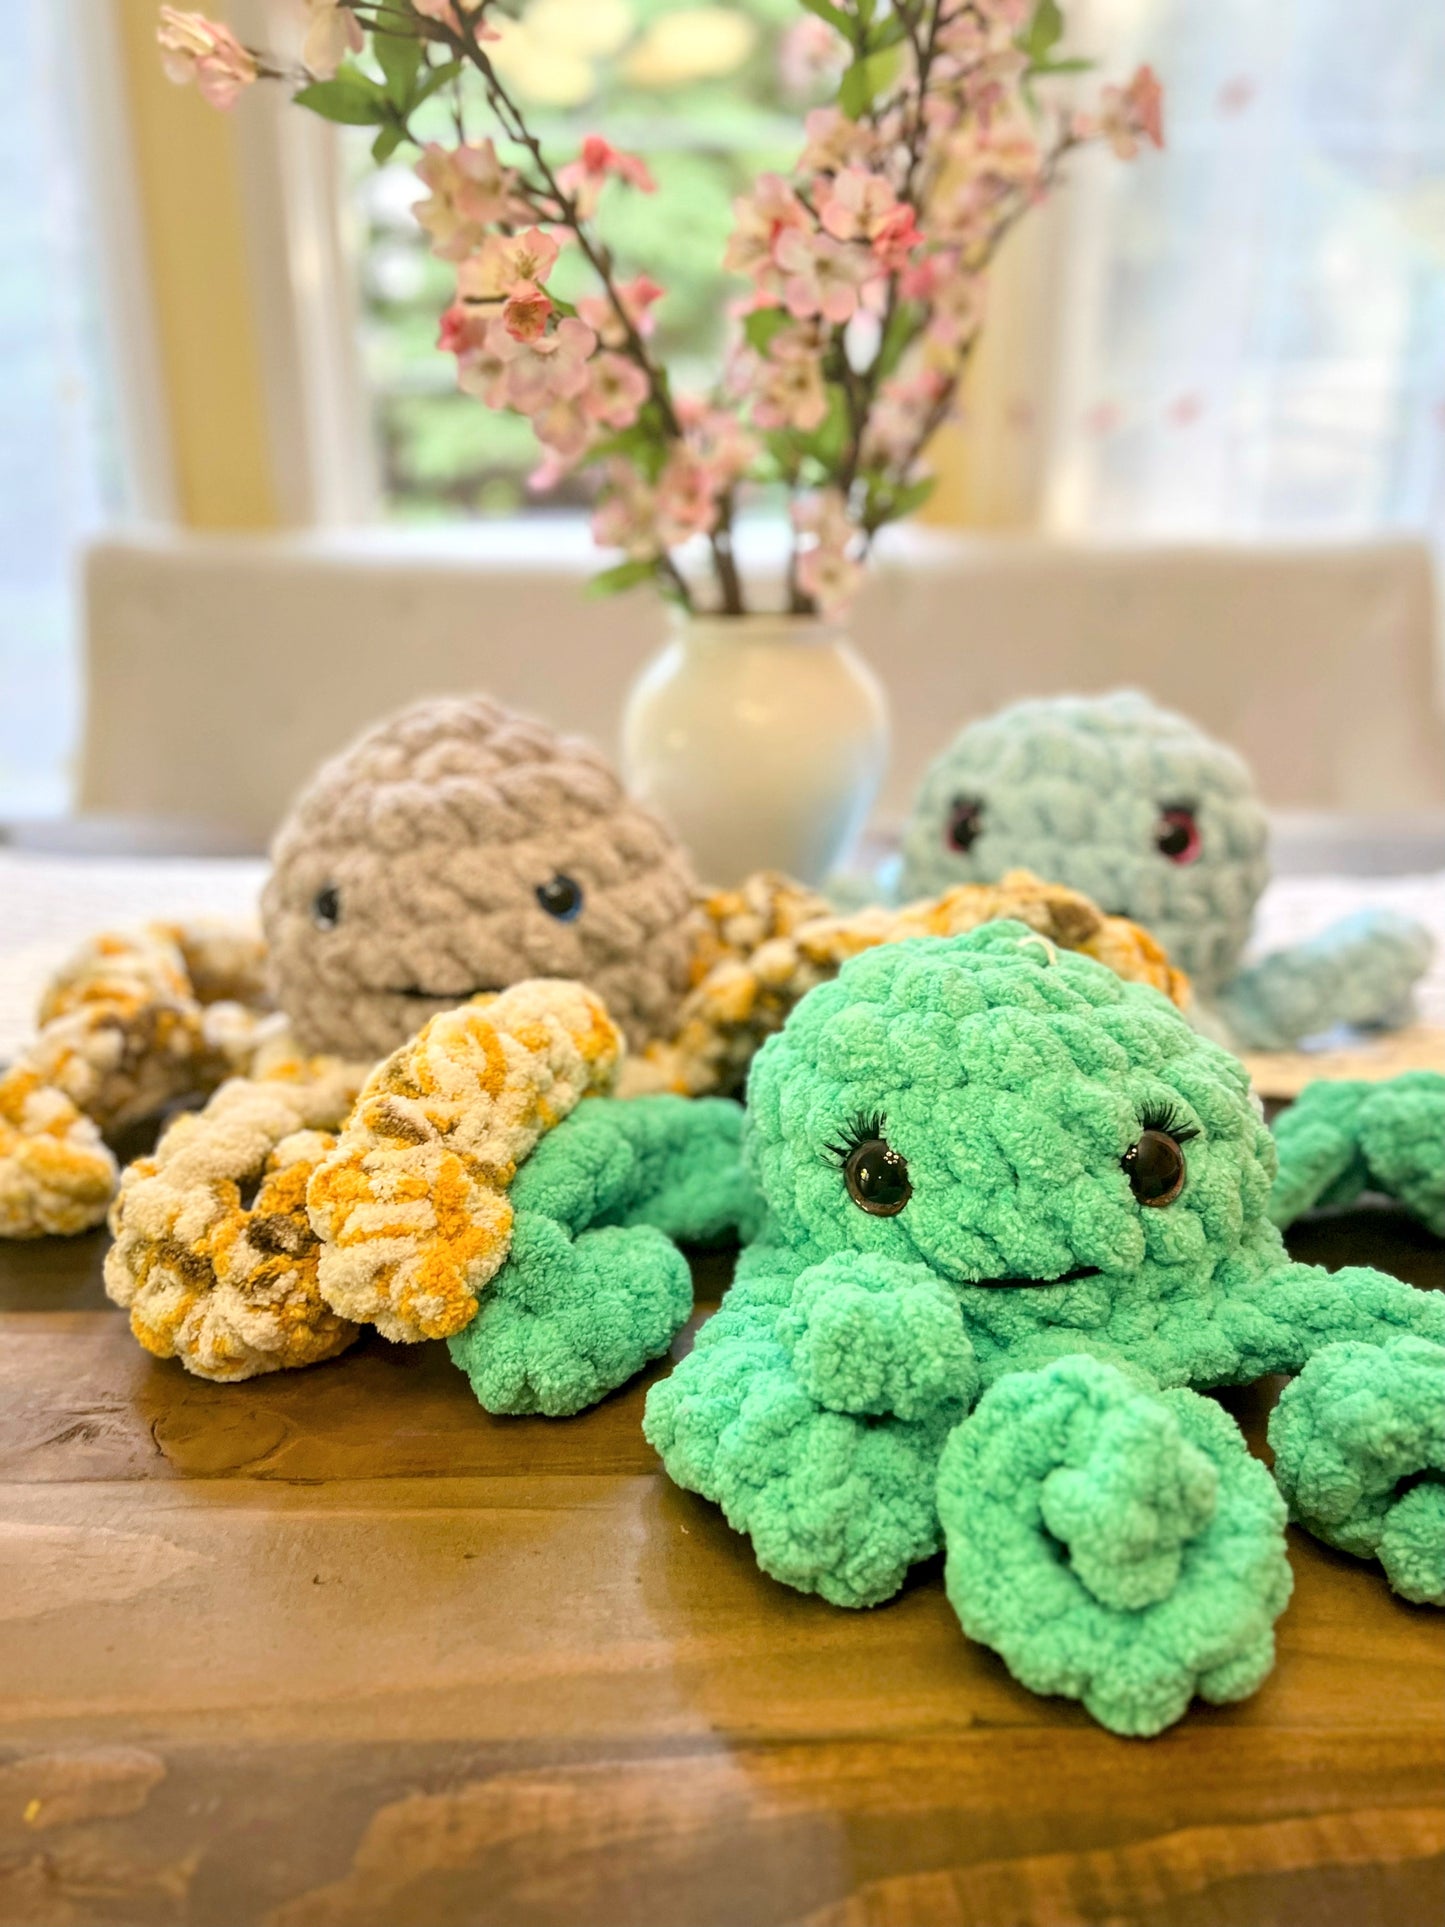 Stuffed big Octopus 🐙 - Crochet Knitted Amigurumi Toy